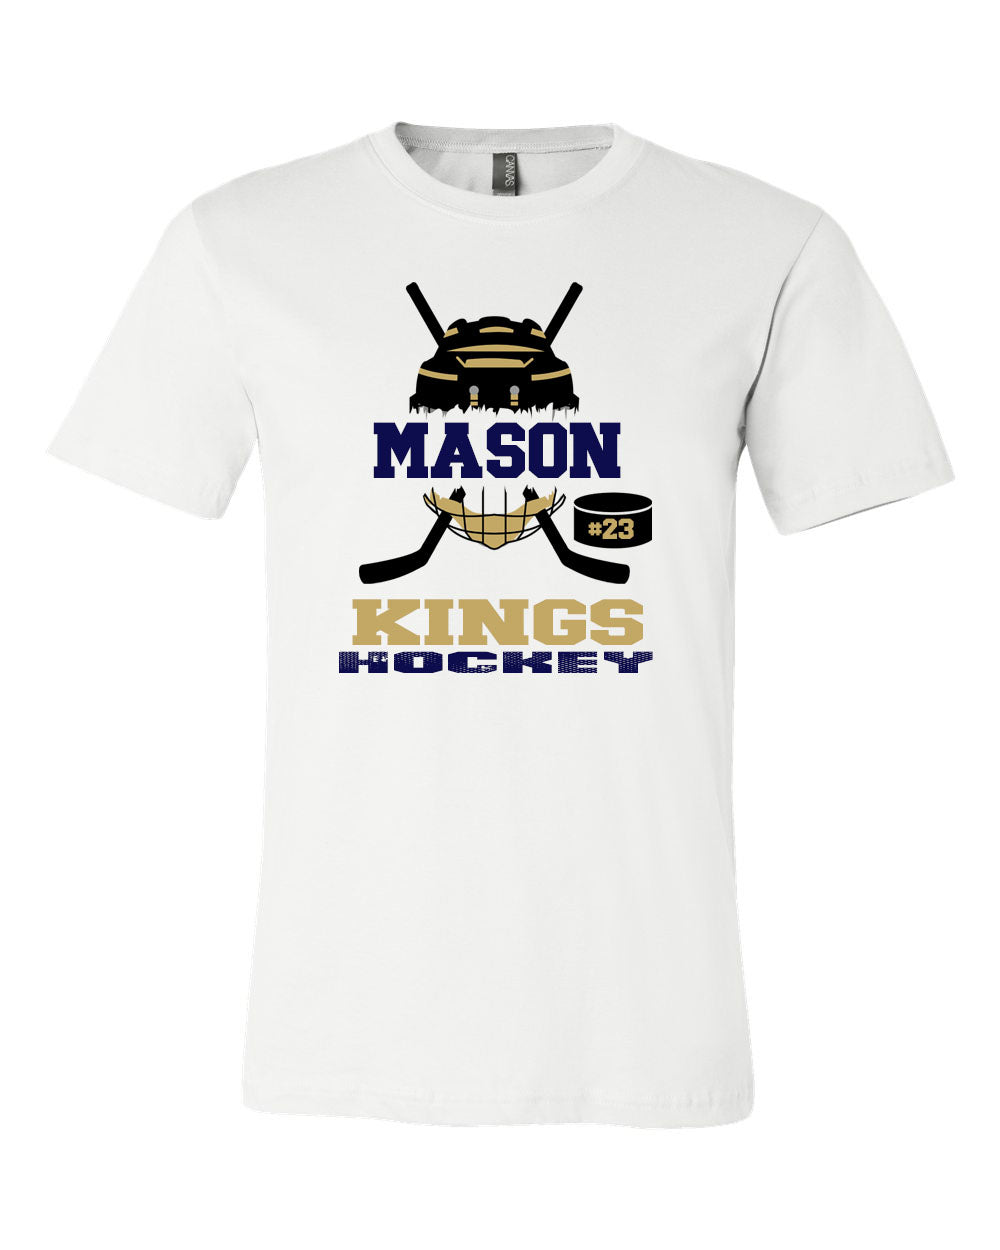 Kings Hockey Design 1 T-Shirt